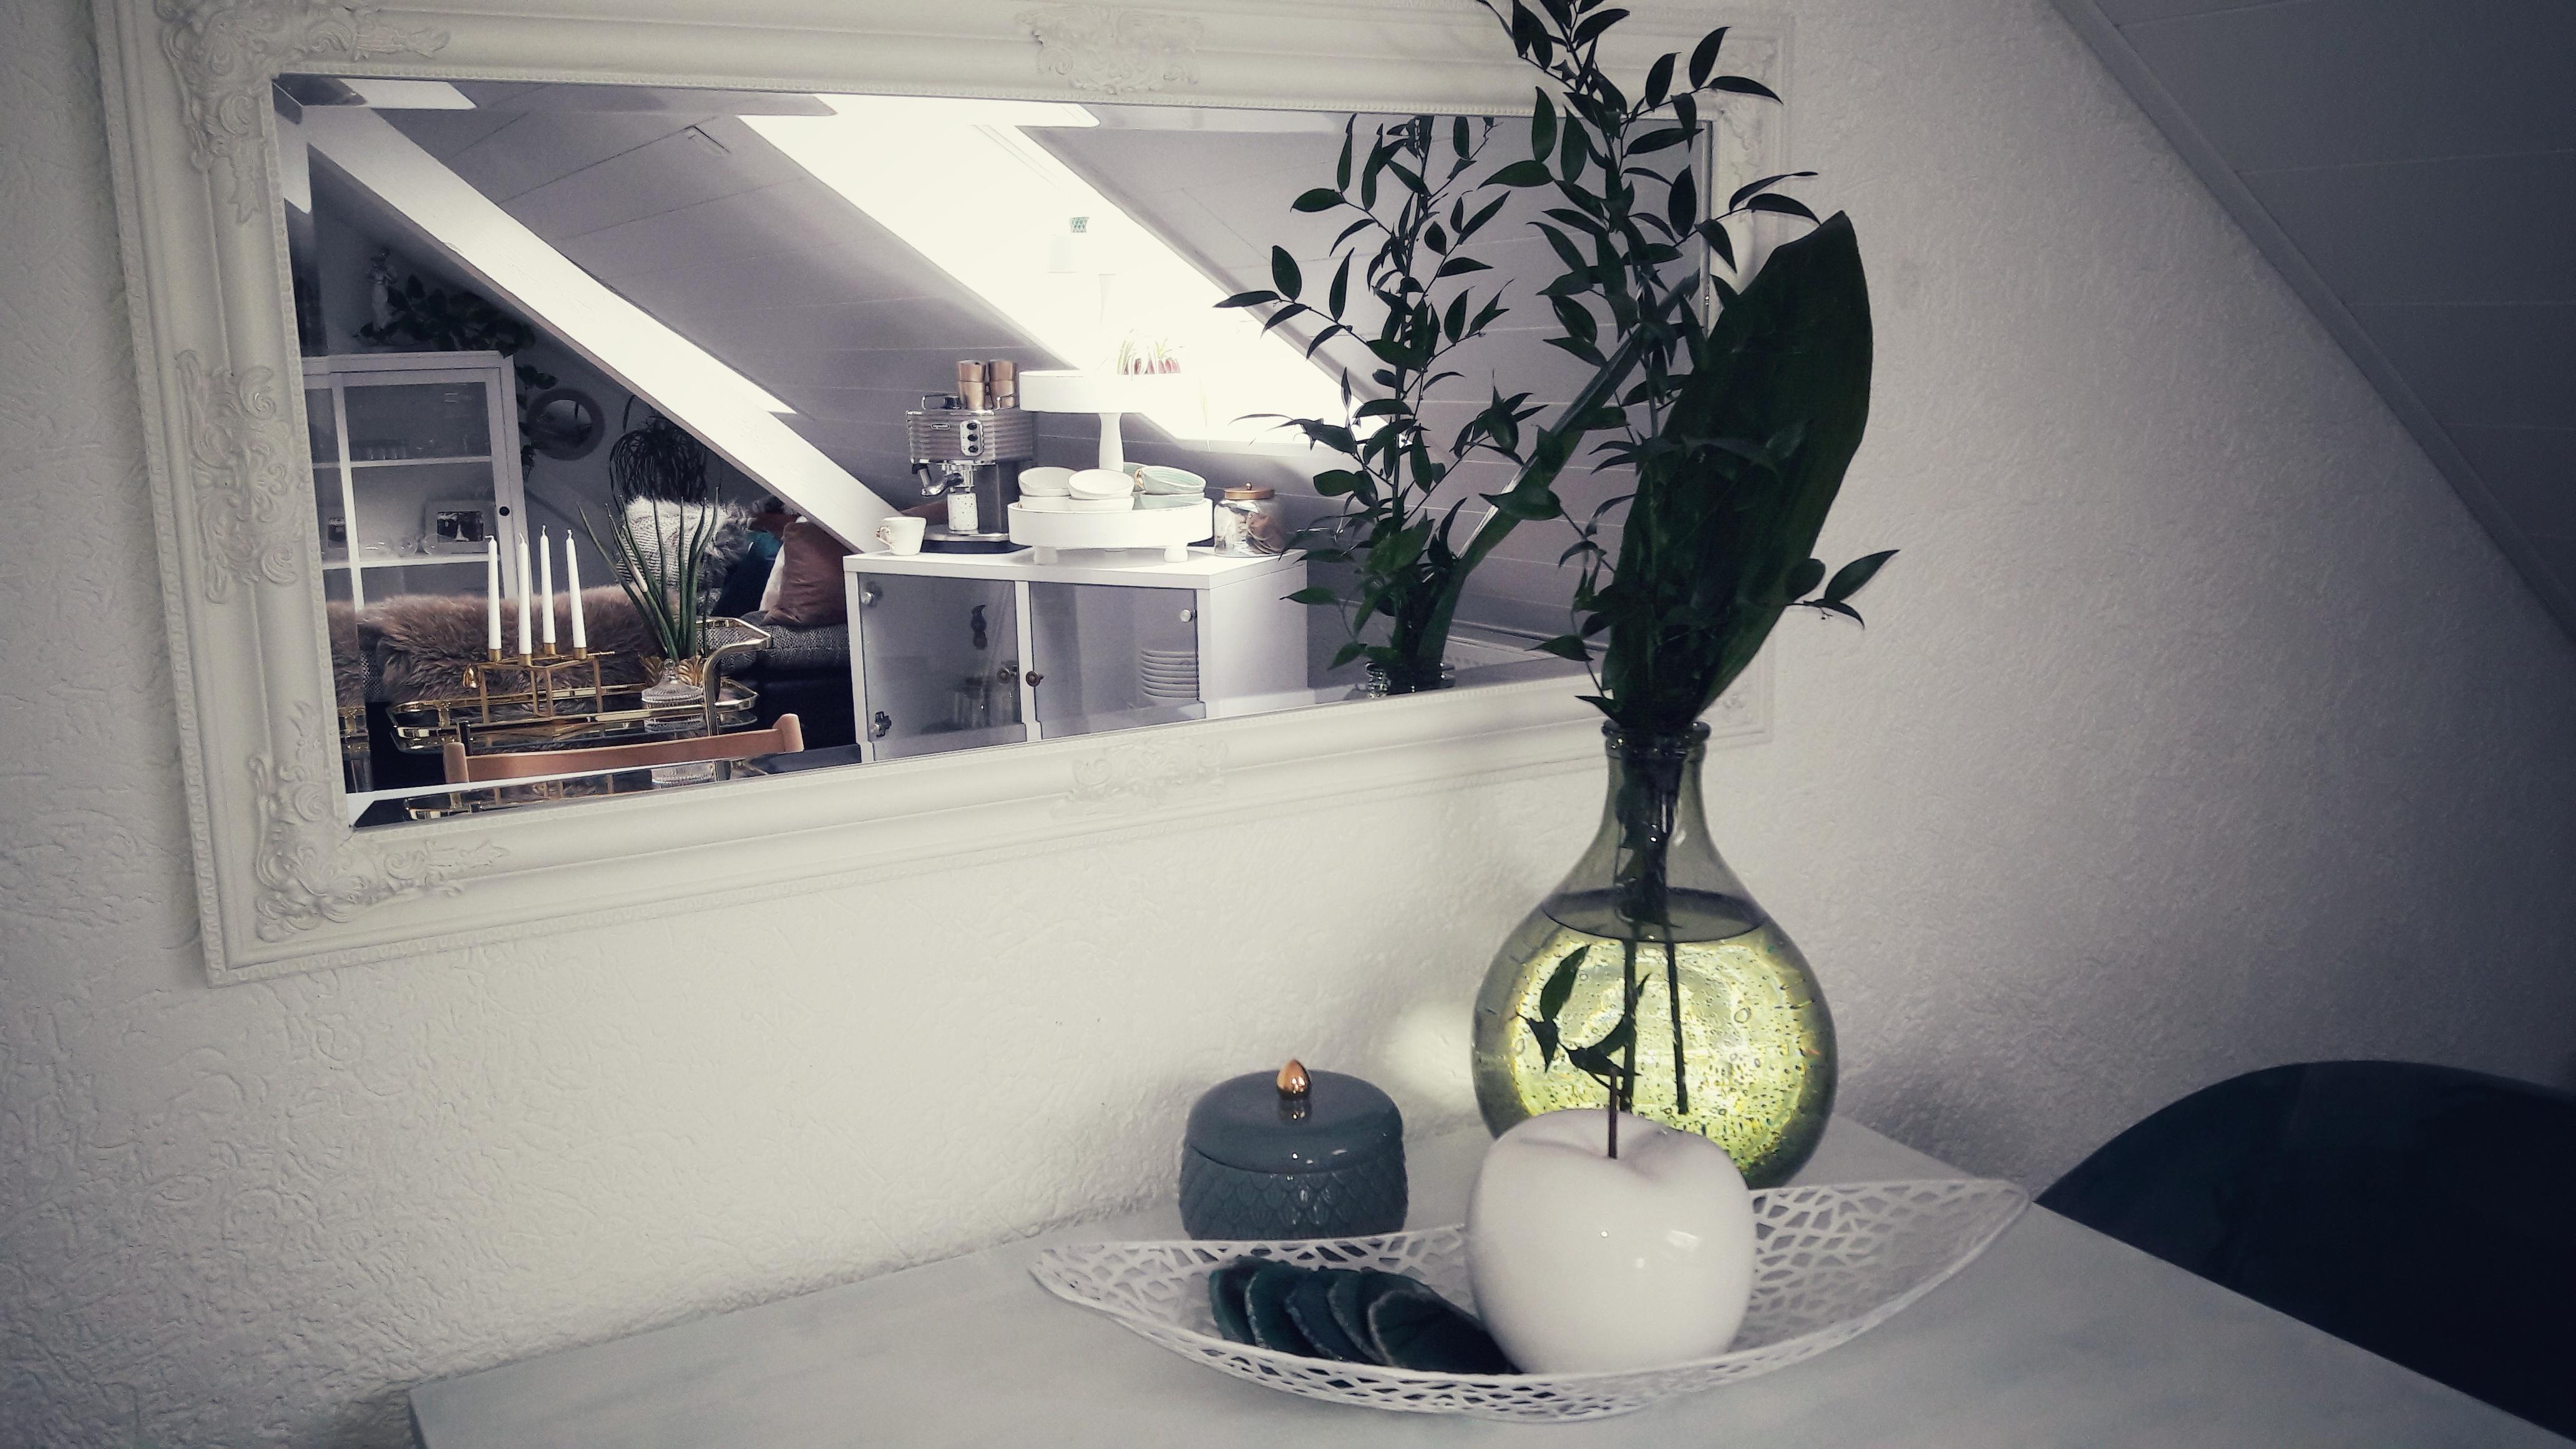 #Essecke #DIY #Table #Mirror #White #Green